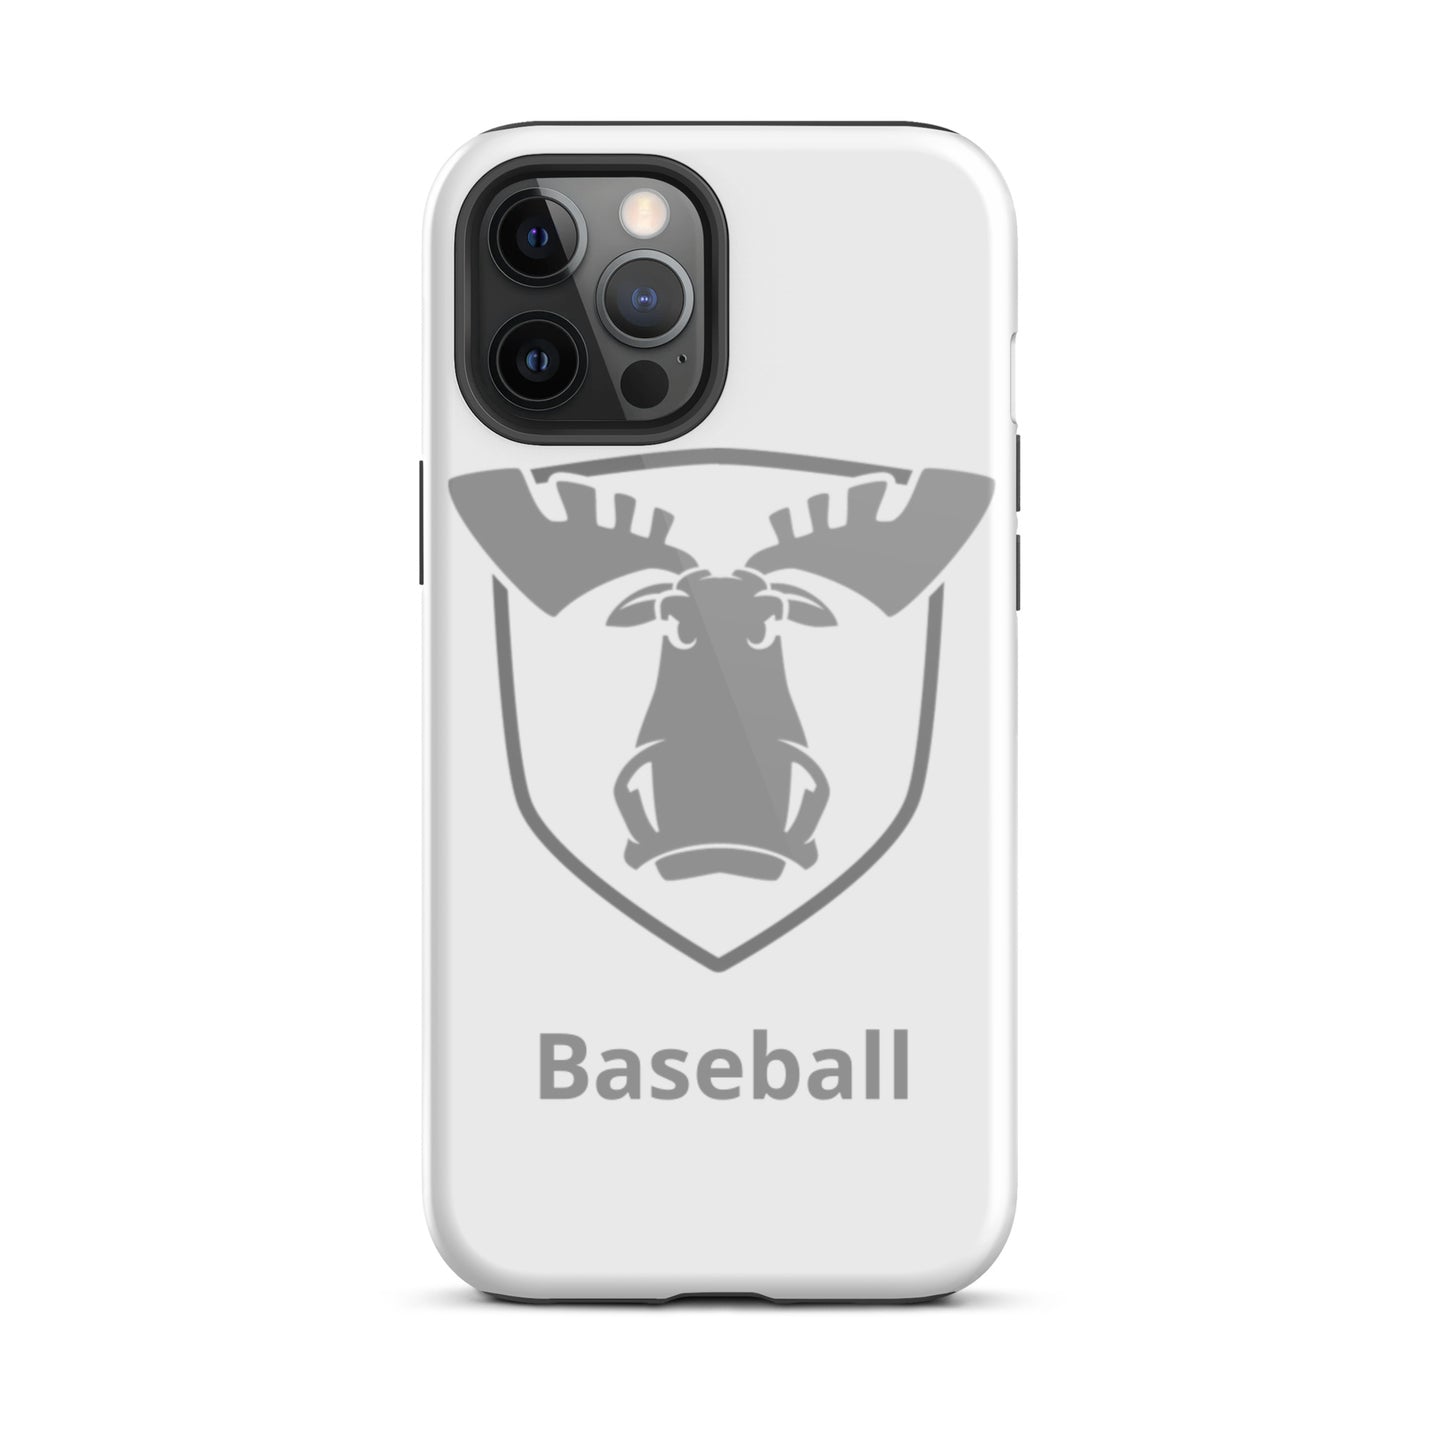 Tough iPhone case with Moose Shield Logo